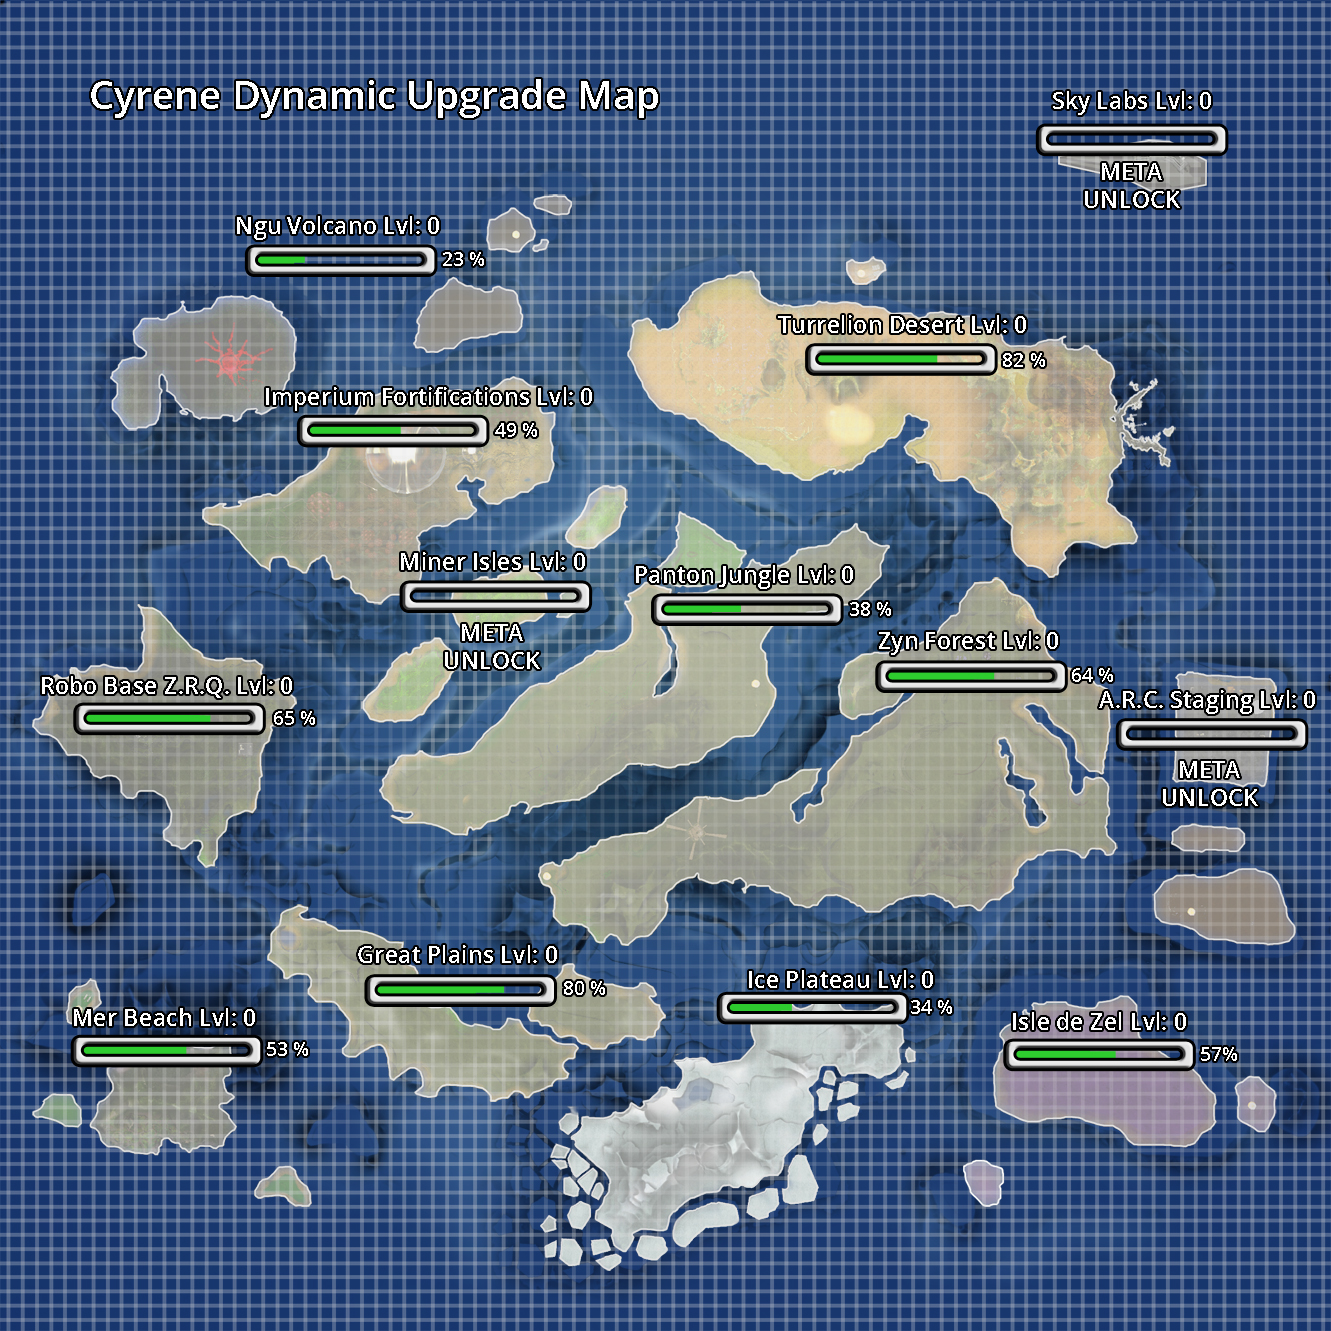 Cyrene Dynamic Upgrade Map - Jan 20 2015.jpg